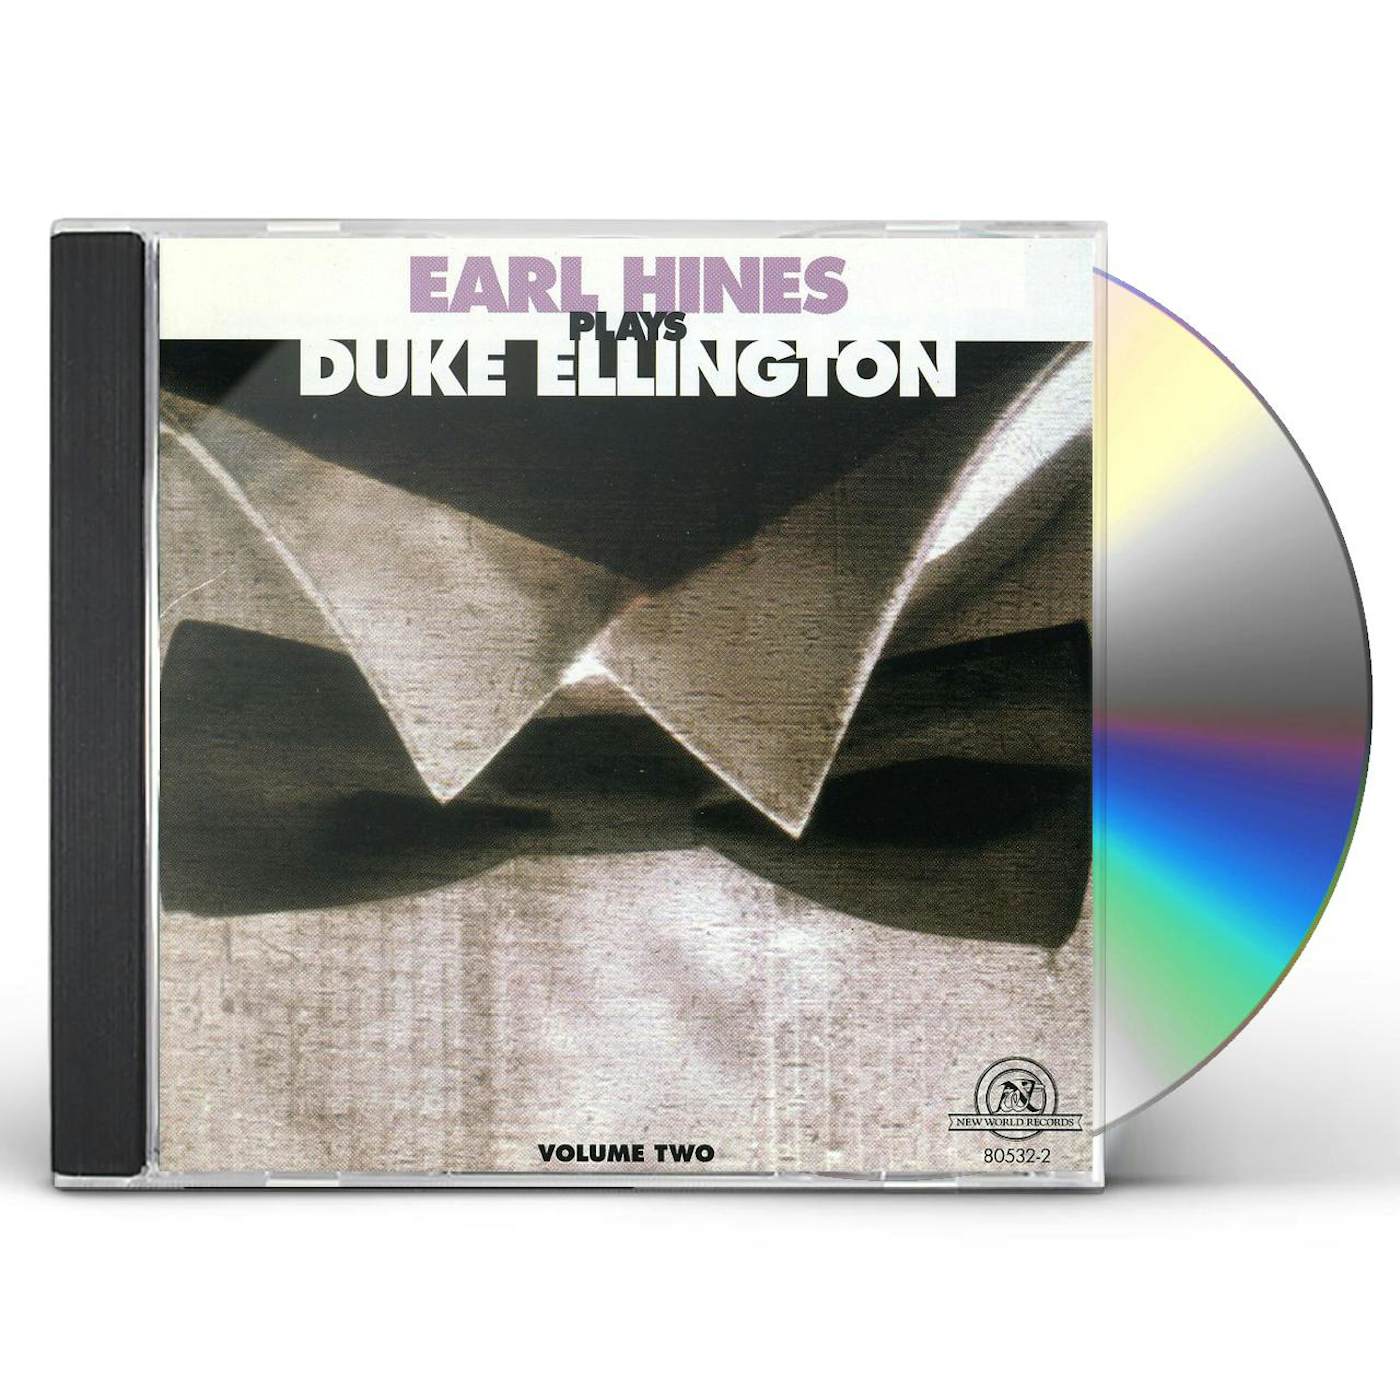 Earl Hines PLAYS DUKE ELLINGTON 2 CD